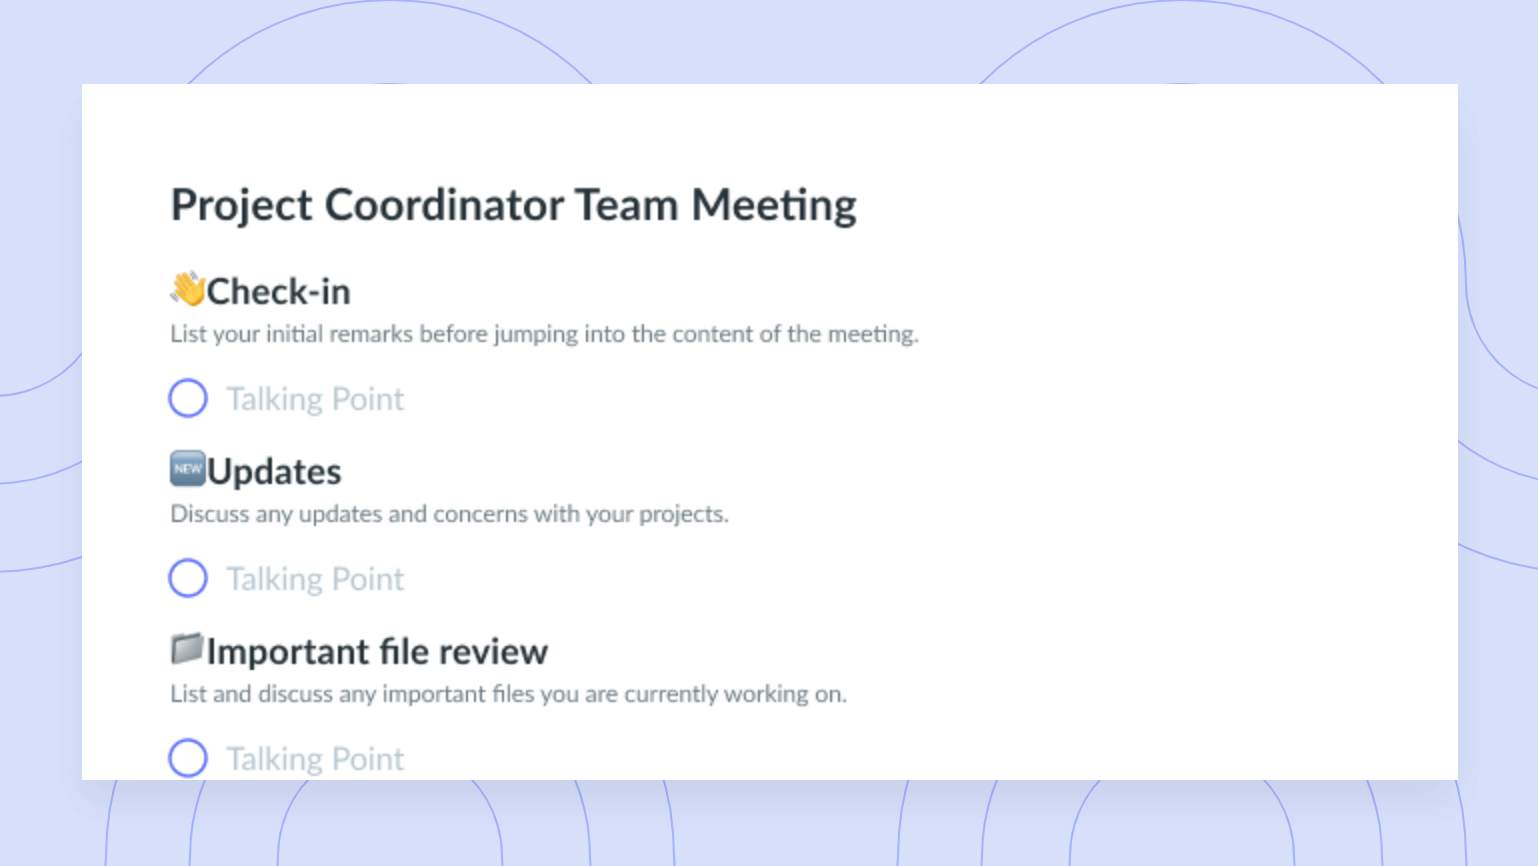 Project Coordinator Team Meeting Template